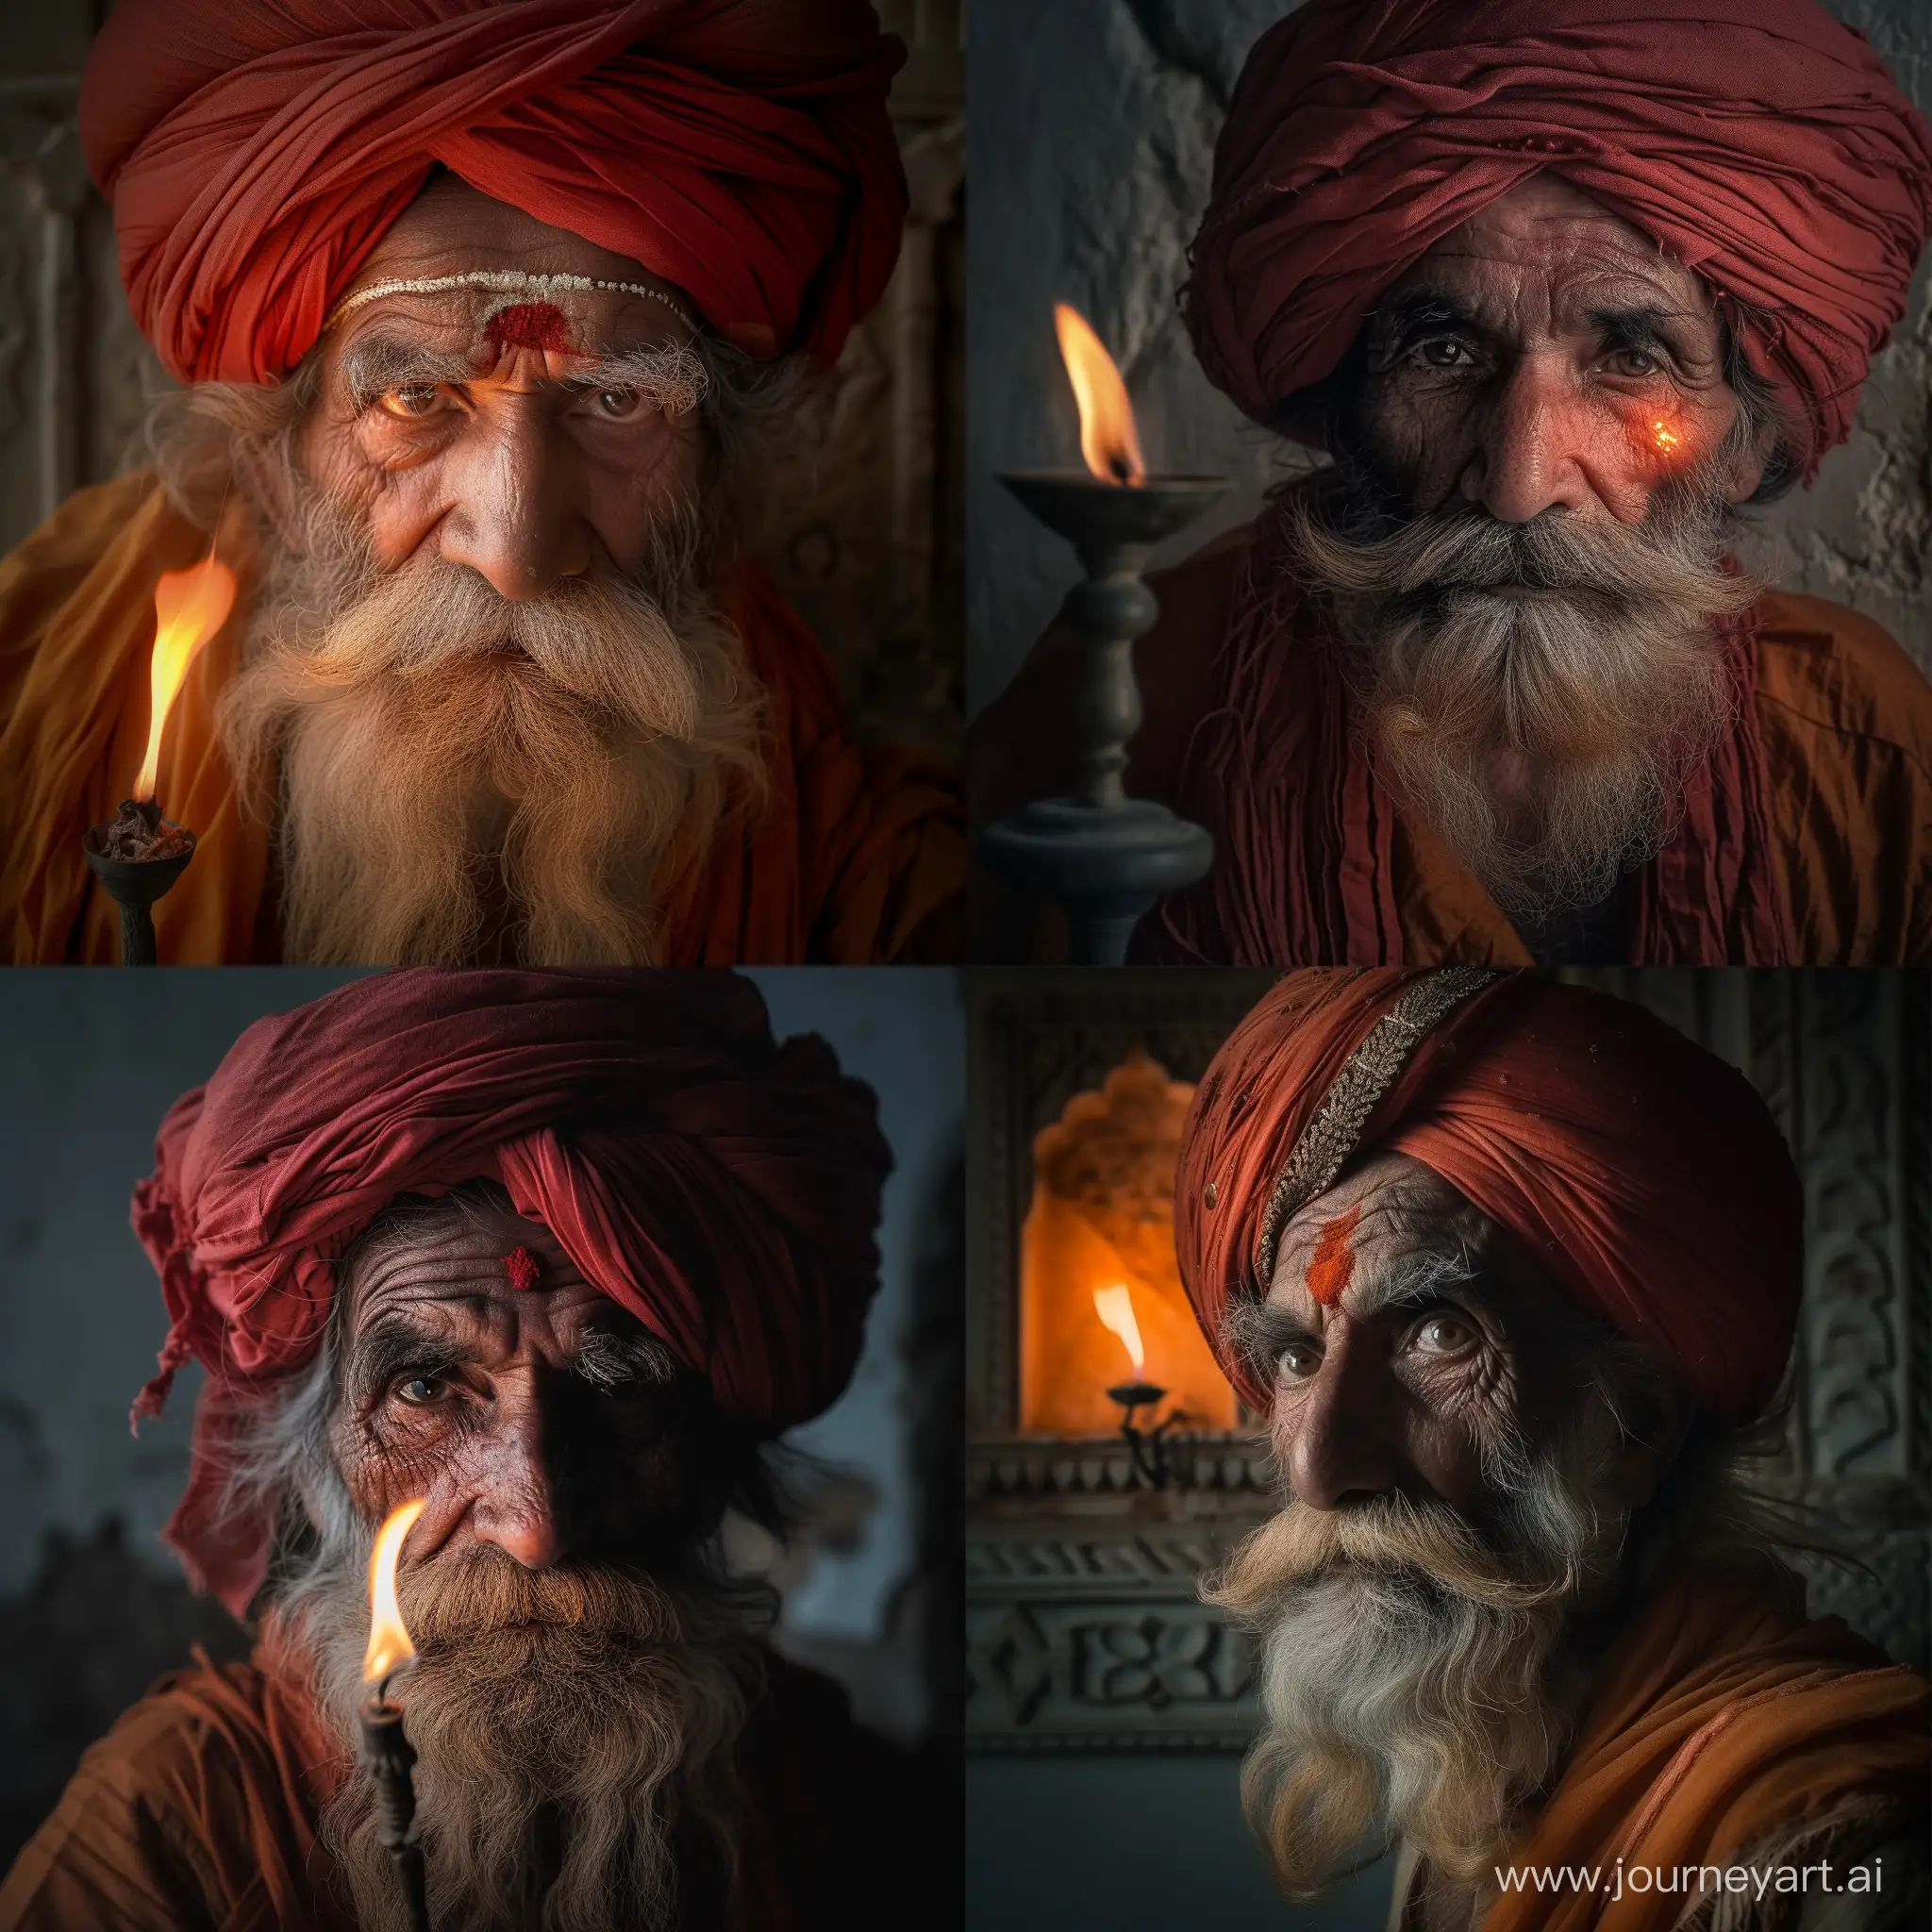 Elderly-Rabari-Gentleman-in-Red-Turban-and-Candlelit-Ambiance